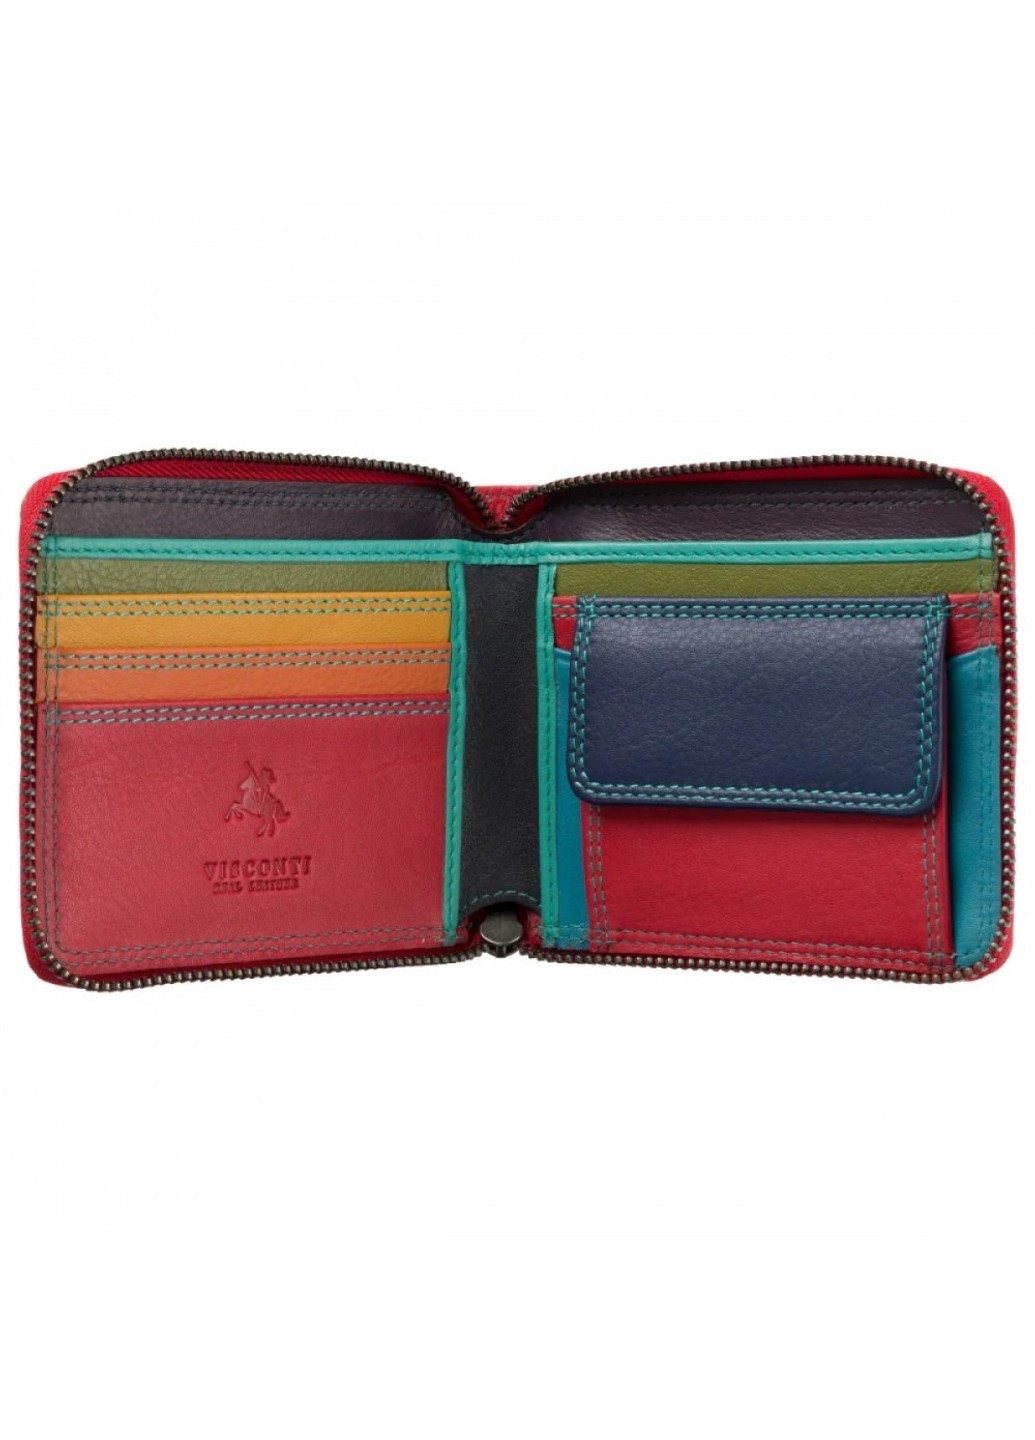 Женский кожаный кошелек с RFID защитой SP29 Picasso (Red Hawaii) Visconti (275867100)